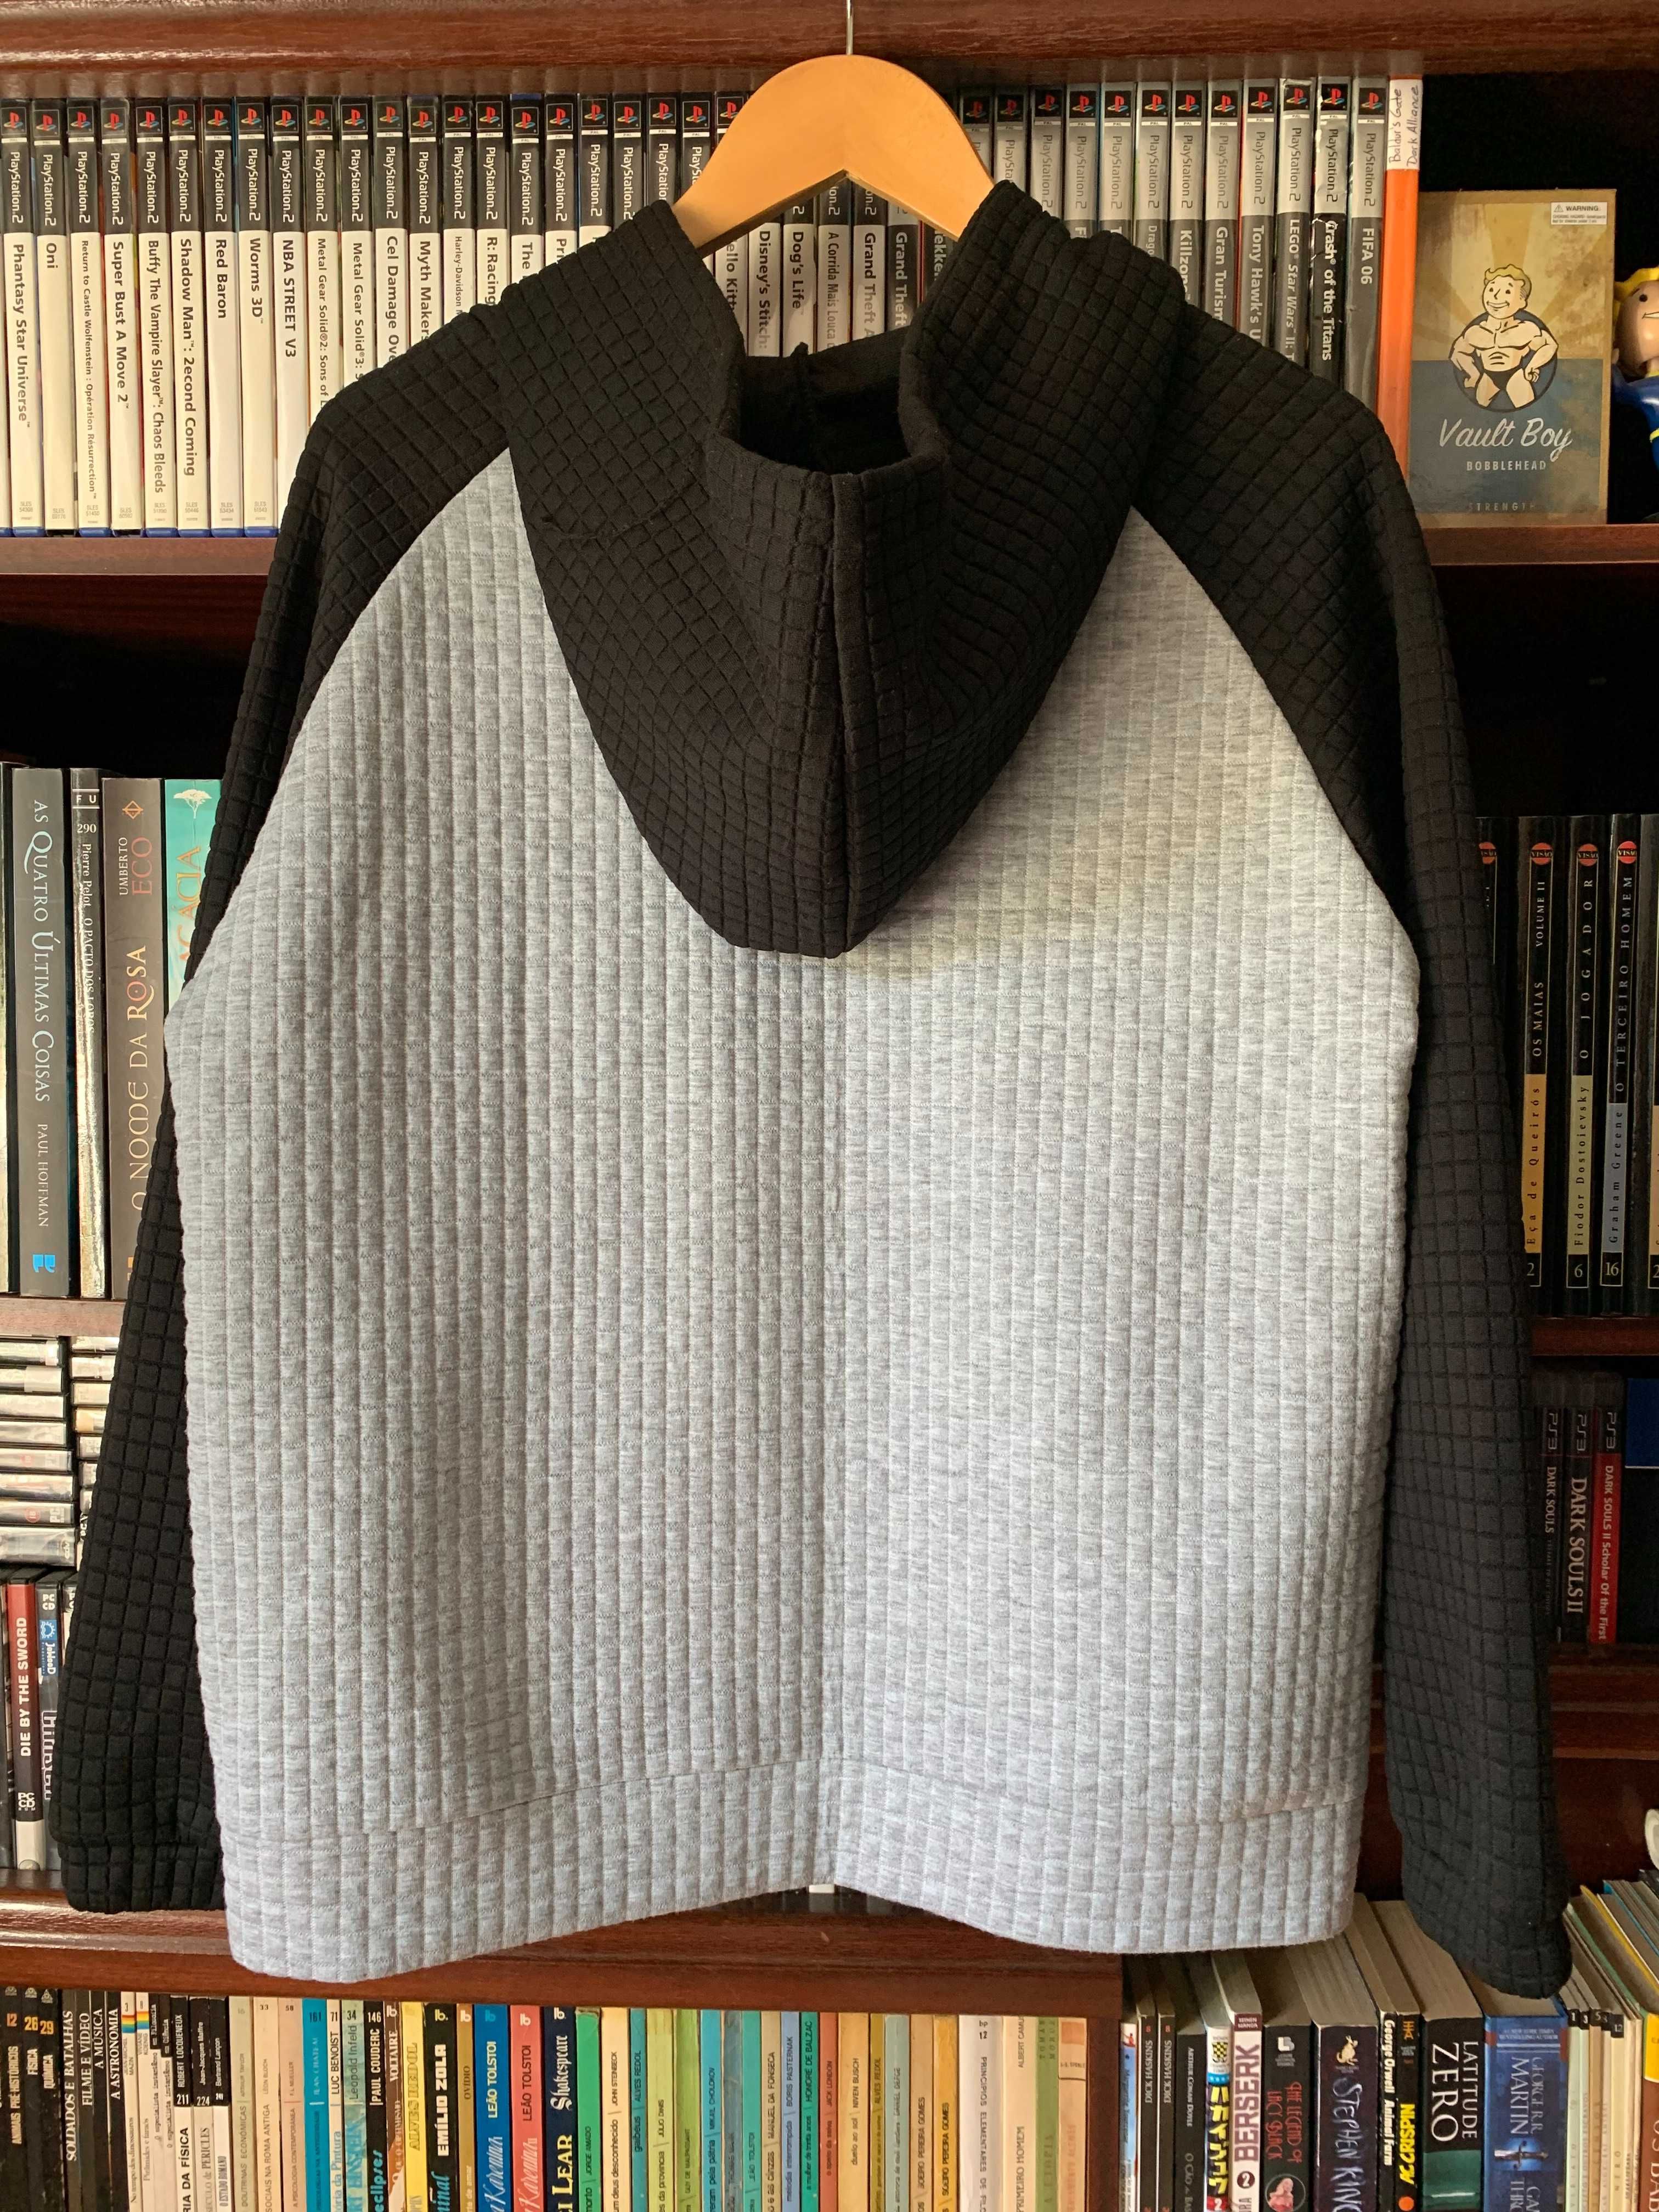 Sweatshirt com Capuz, tamanho L / 40